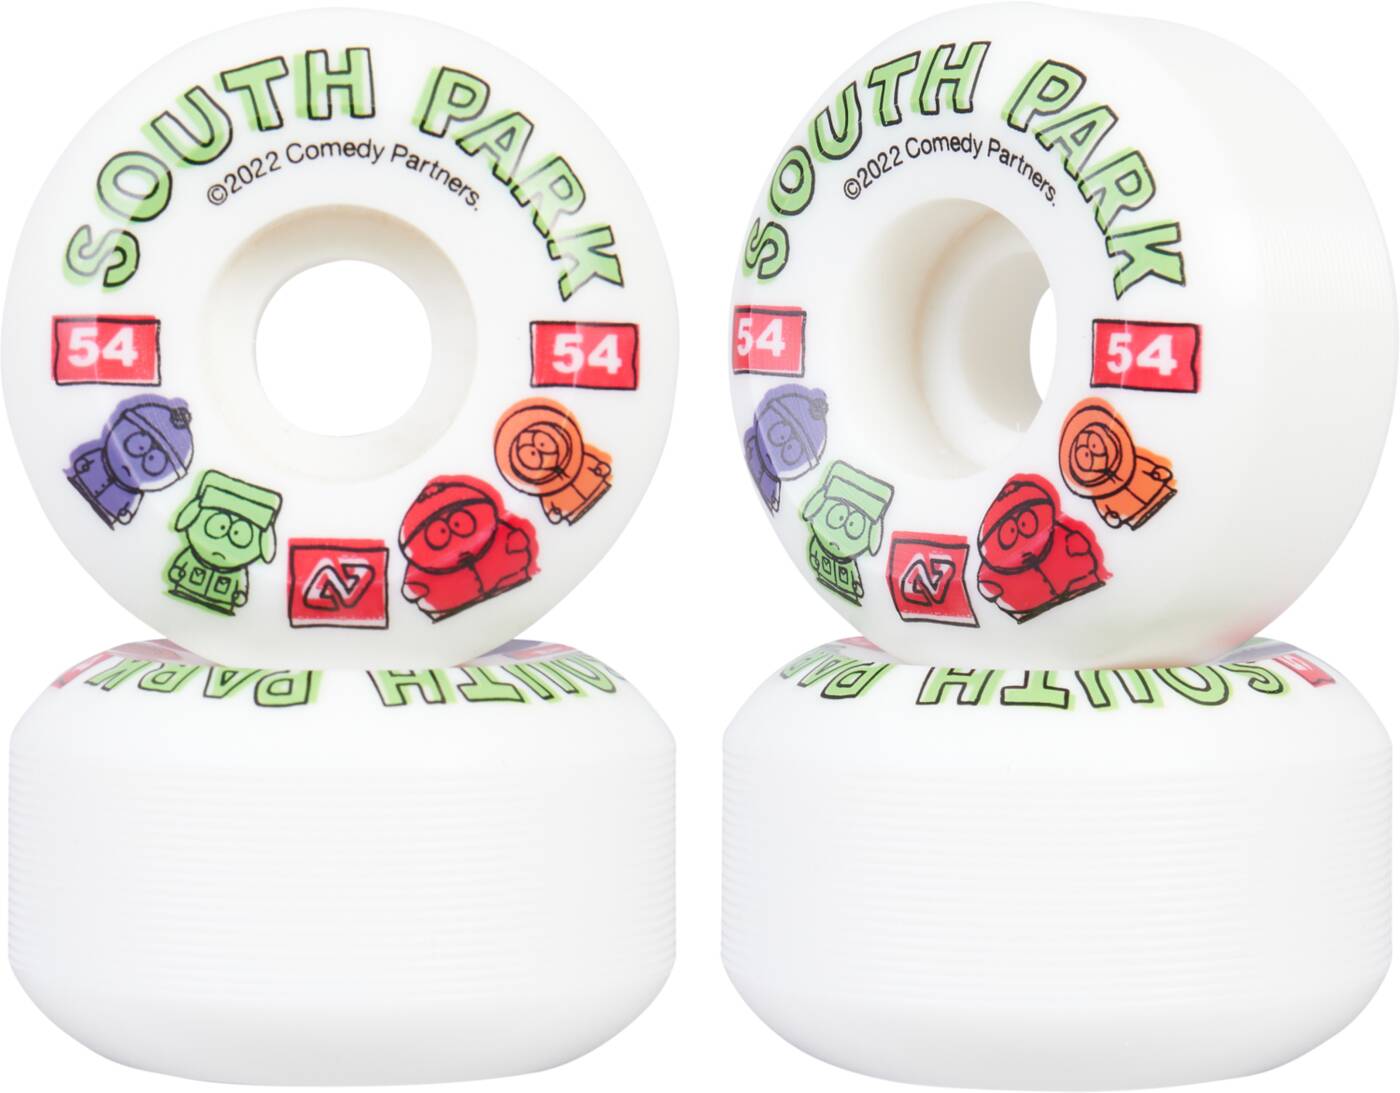 Hydroponic South Park Skateboard Wheels 4-Pack SeasideBMX